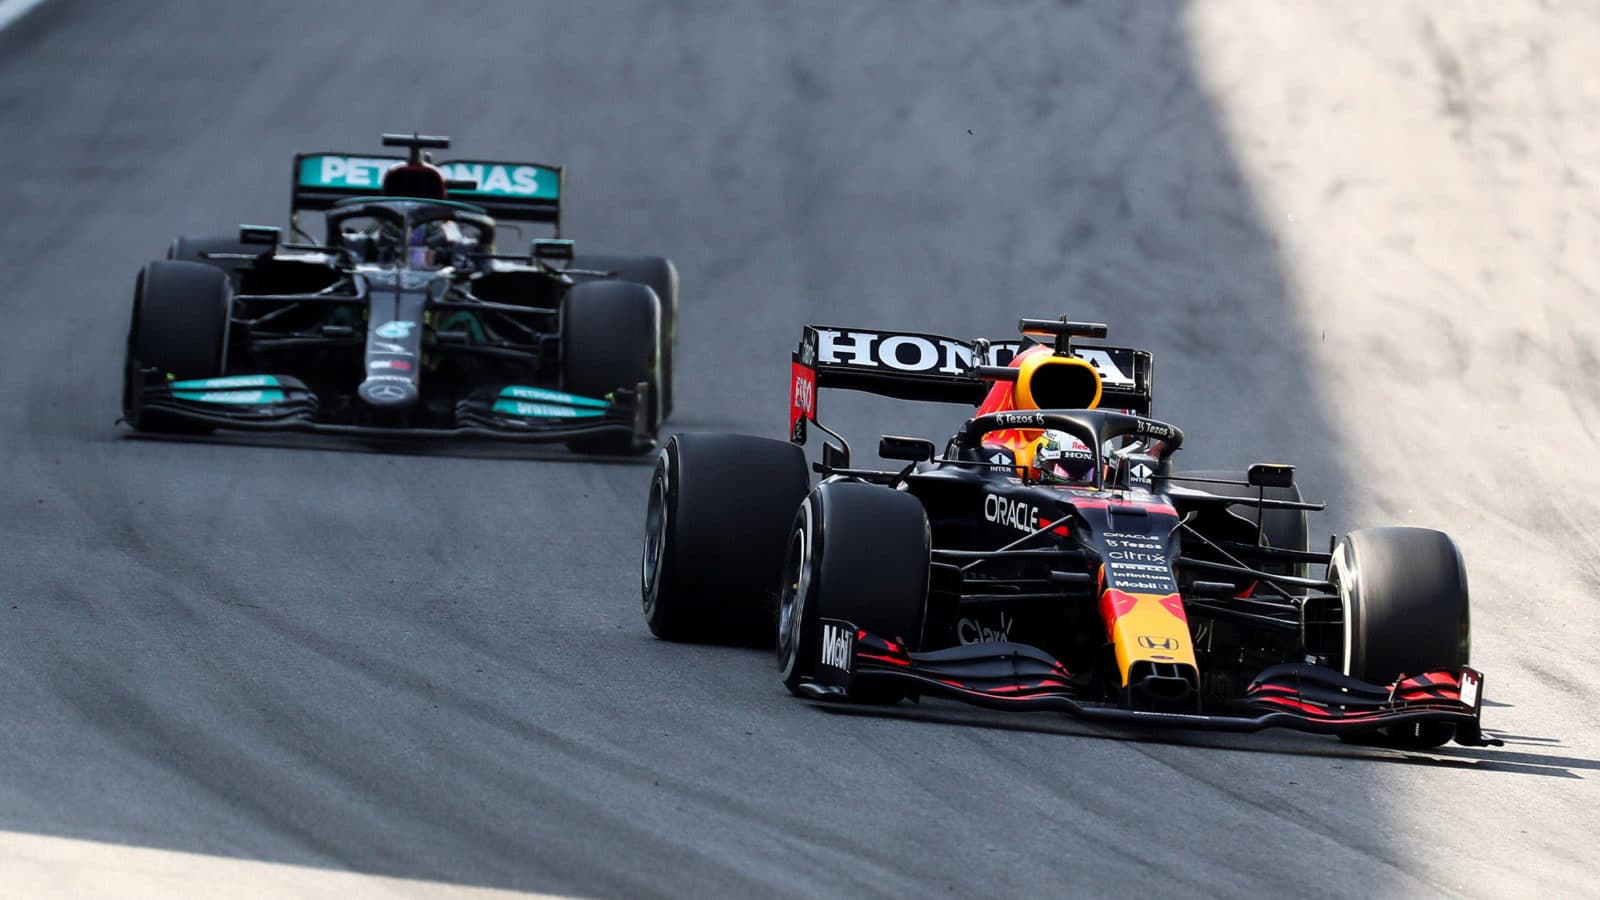 Lewis Hamilton follows Max Verstappen closely in the 2021 Brazilian Grand Prix